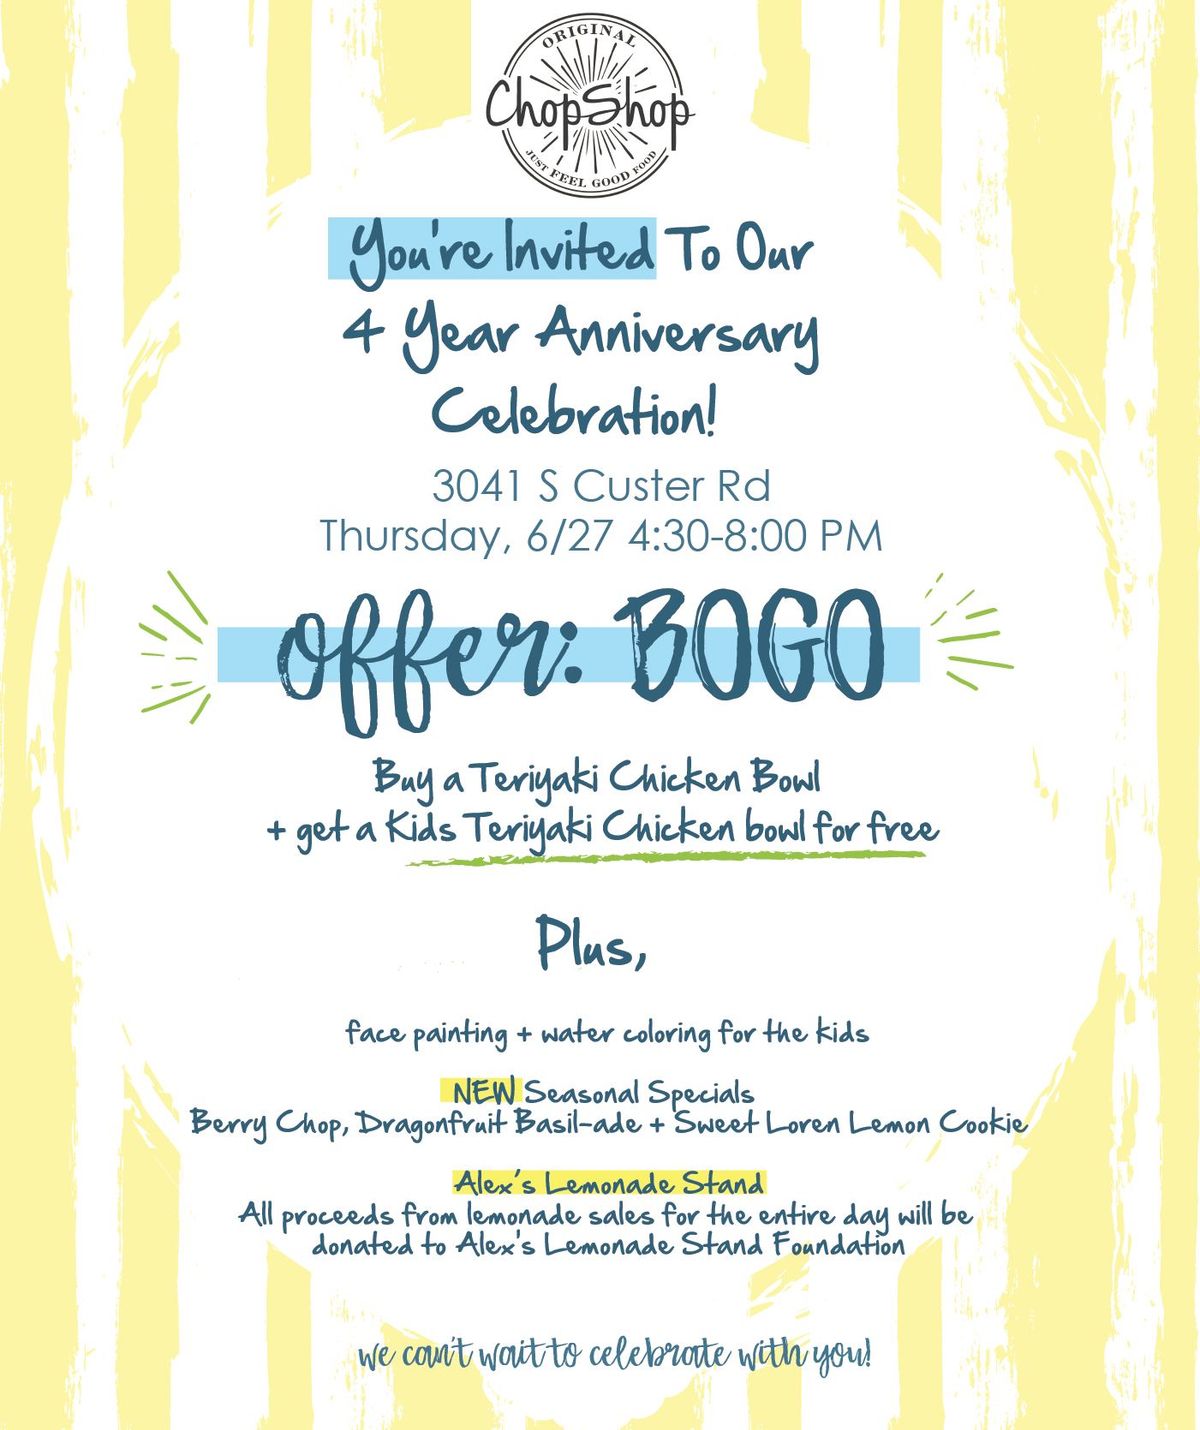 McKinney 4 Year Anniversary Celebration \ud83c\udf89 NEW menu items, Alex's Lemonade Stand + Sweet Loren's!